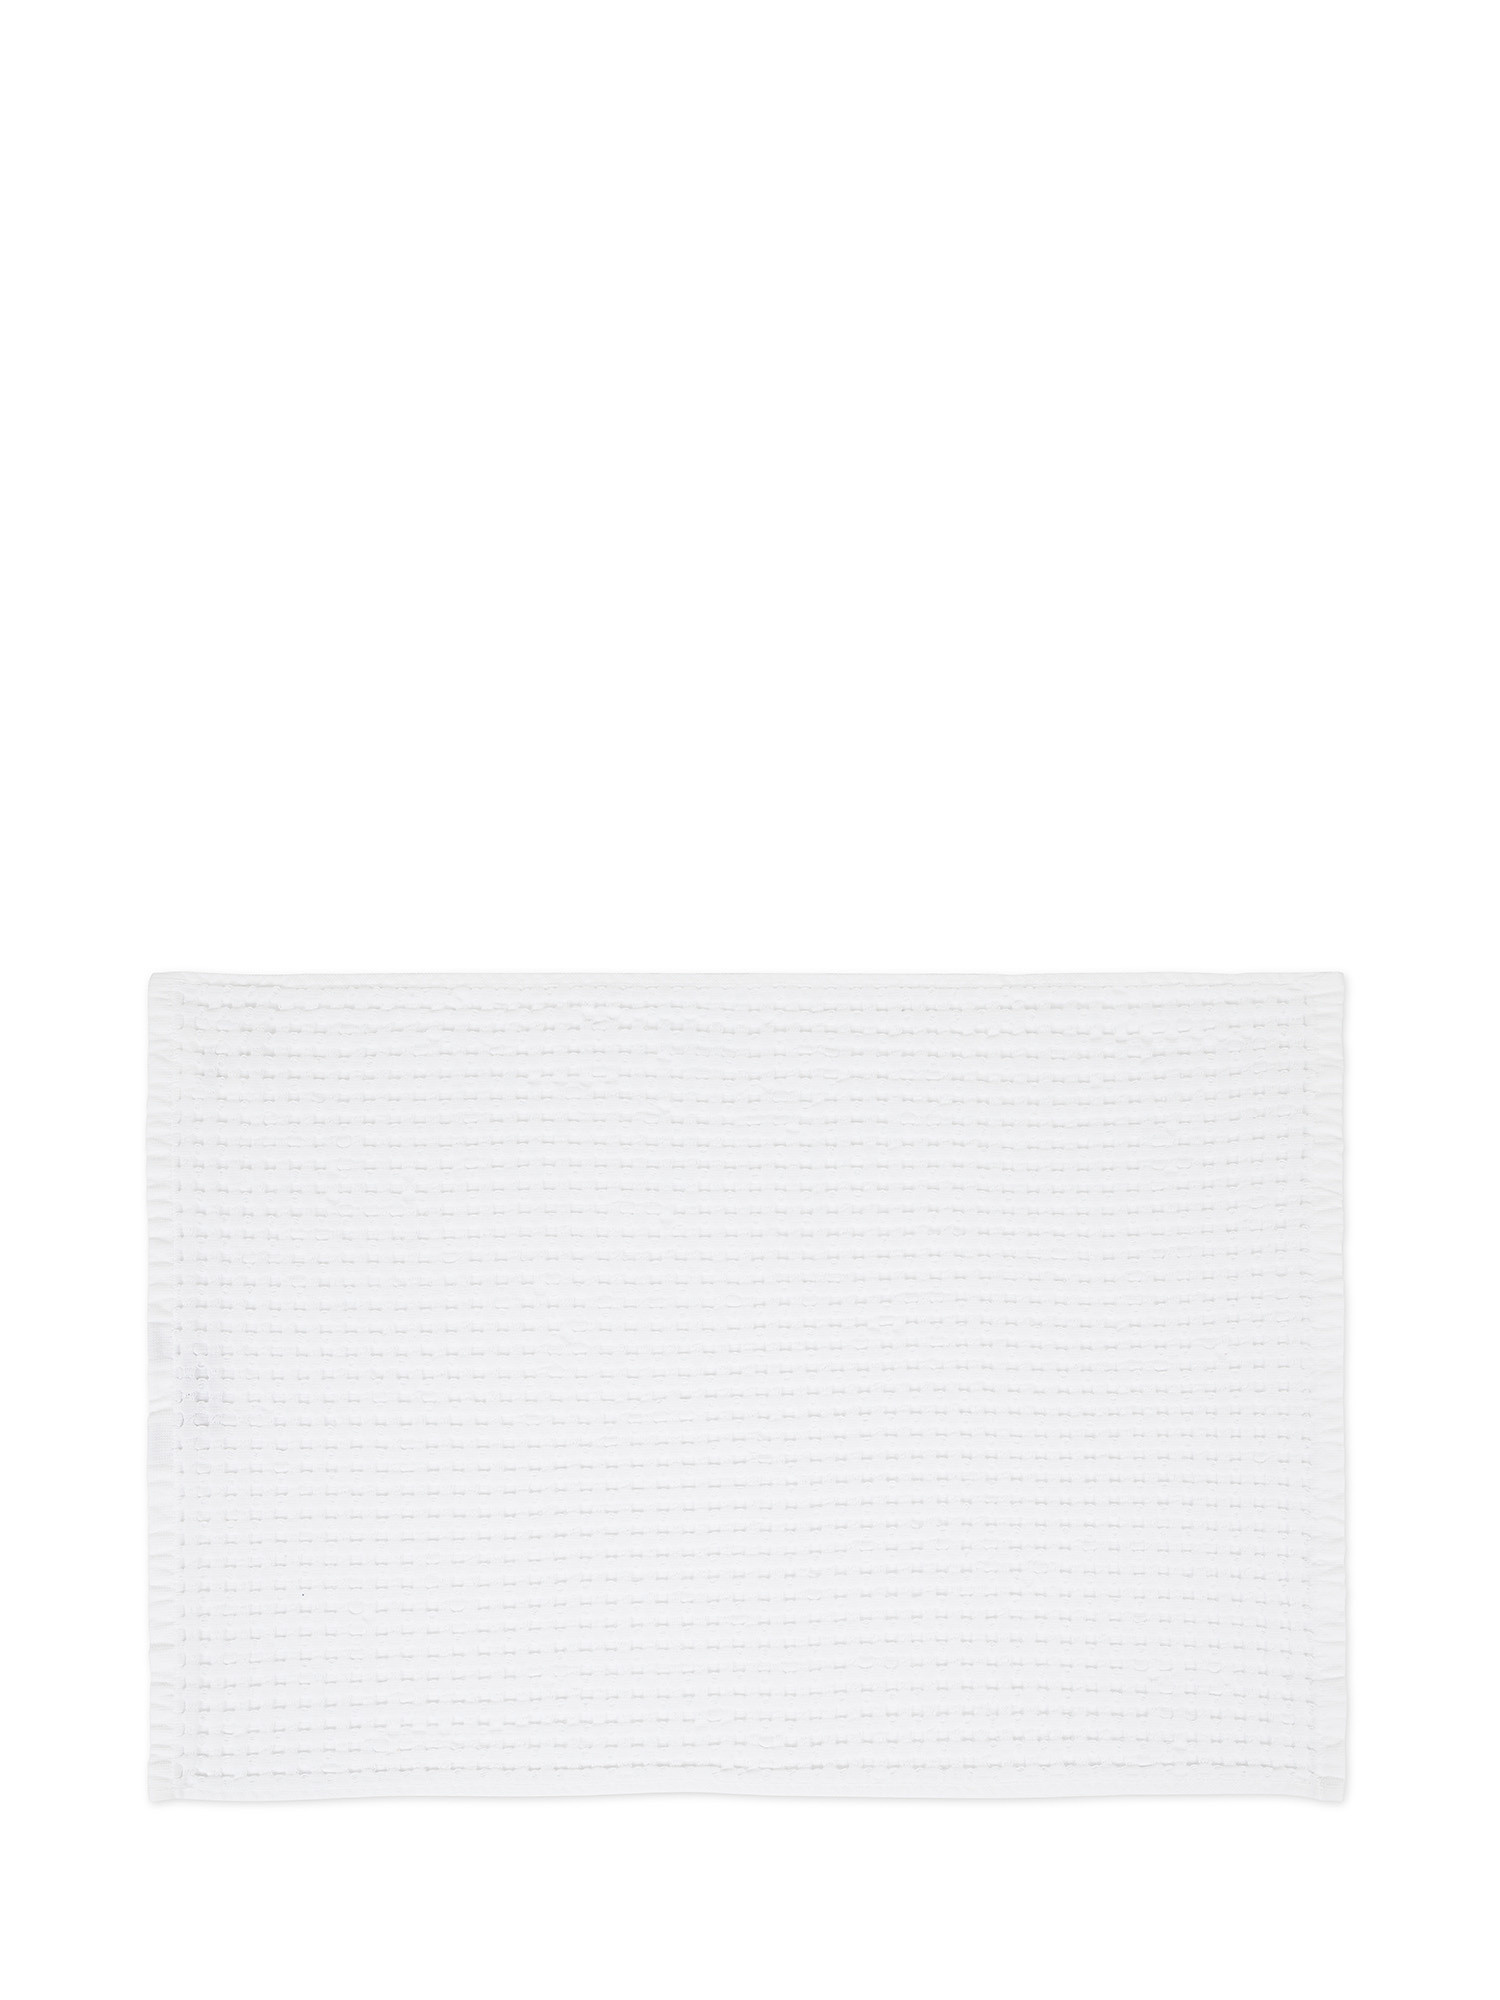 Honeycomb cotton towel, White, large image number 1